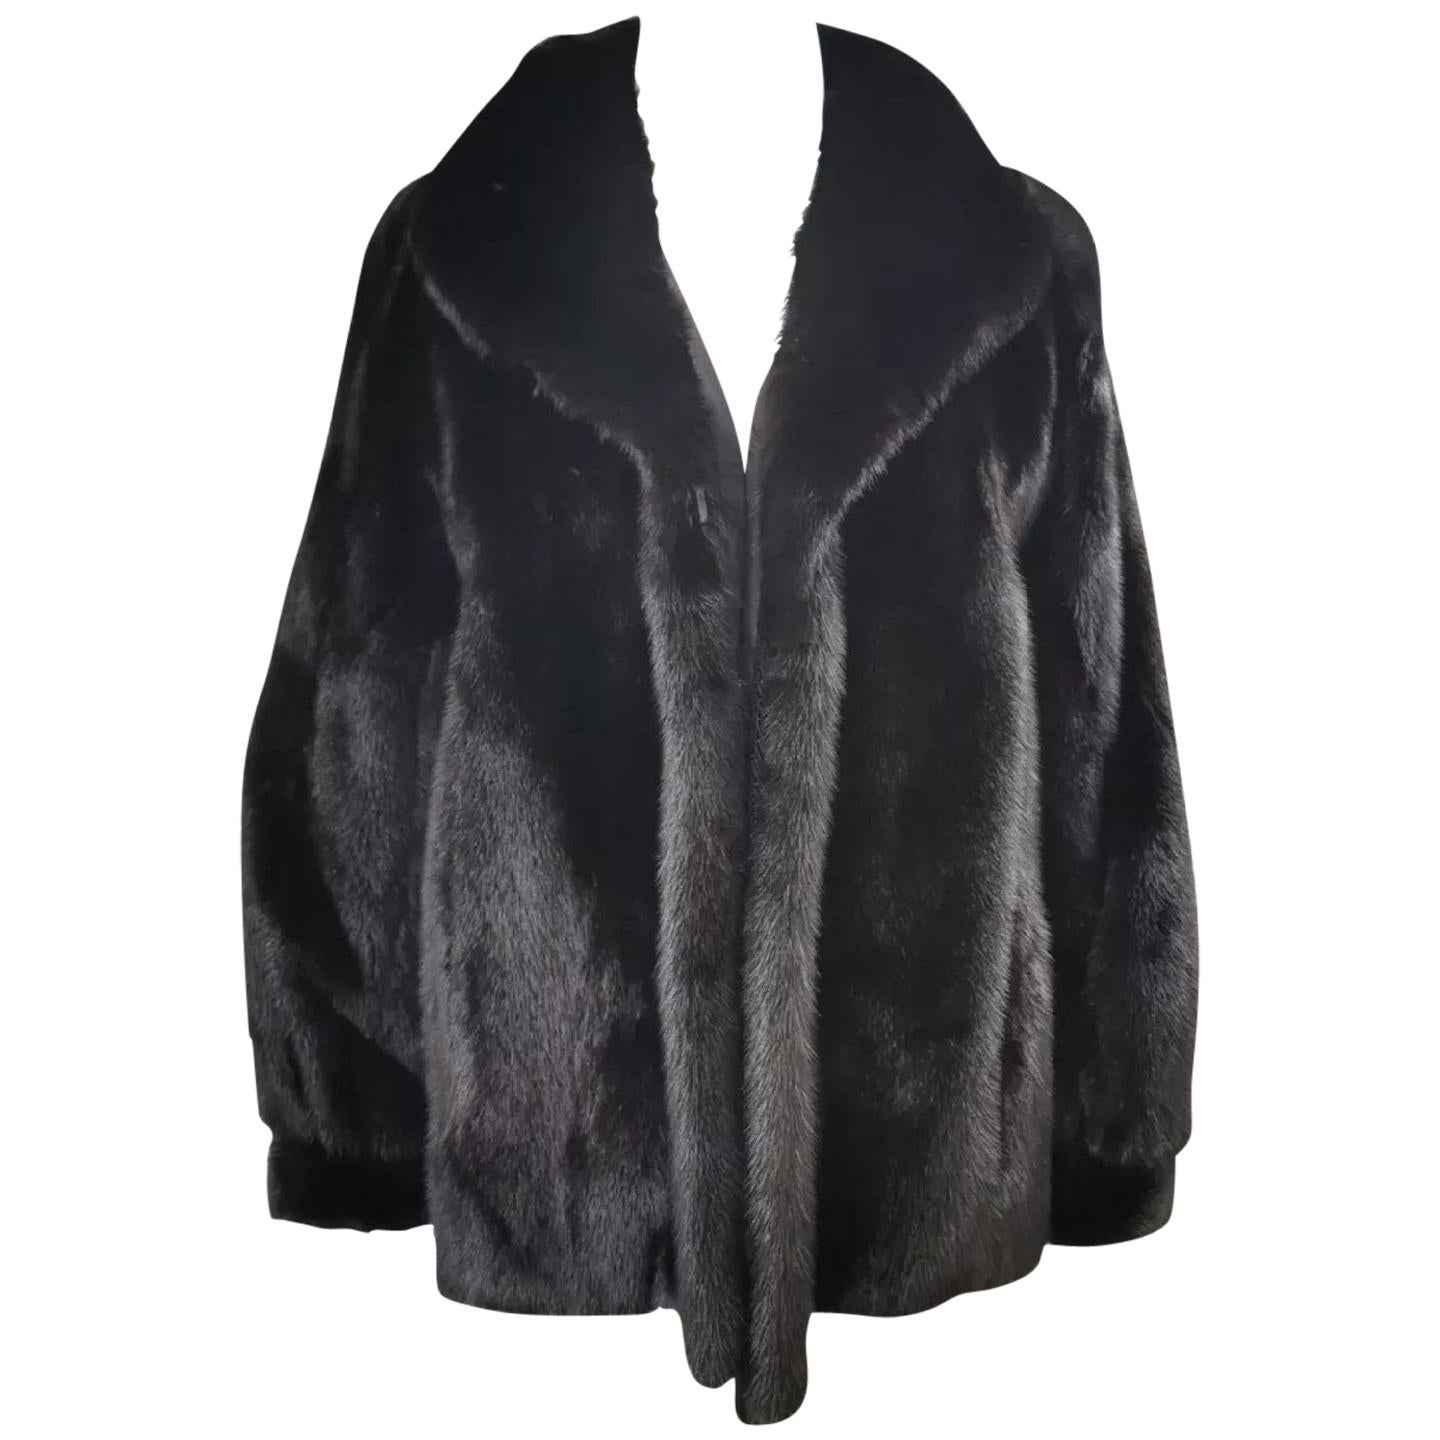  Brand new Saga mink fur coat size 12